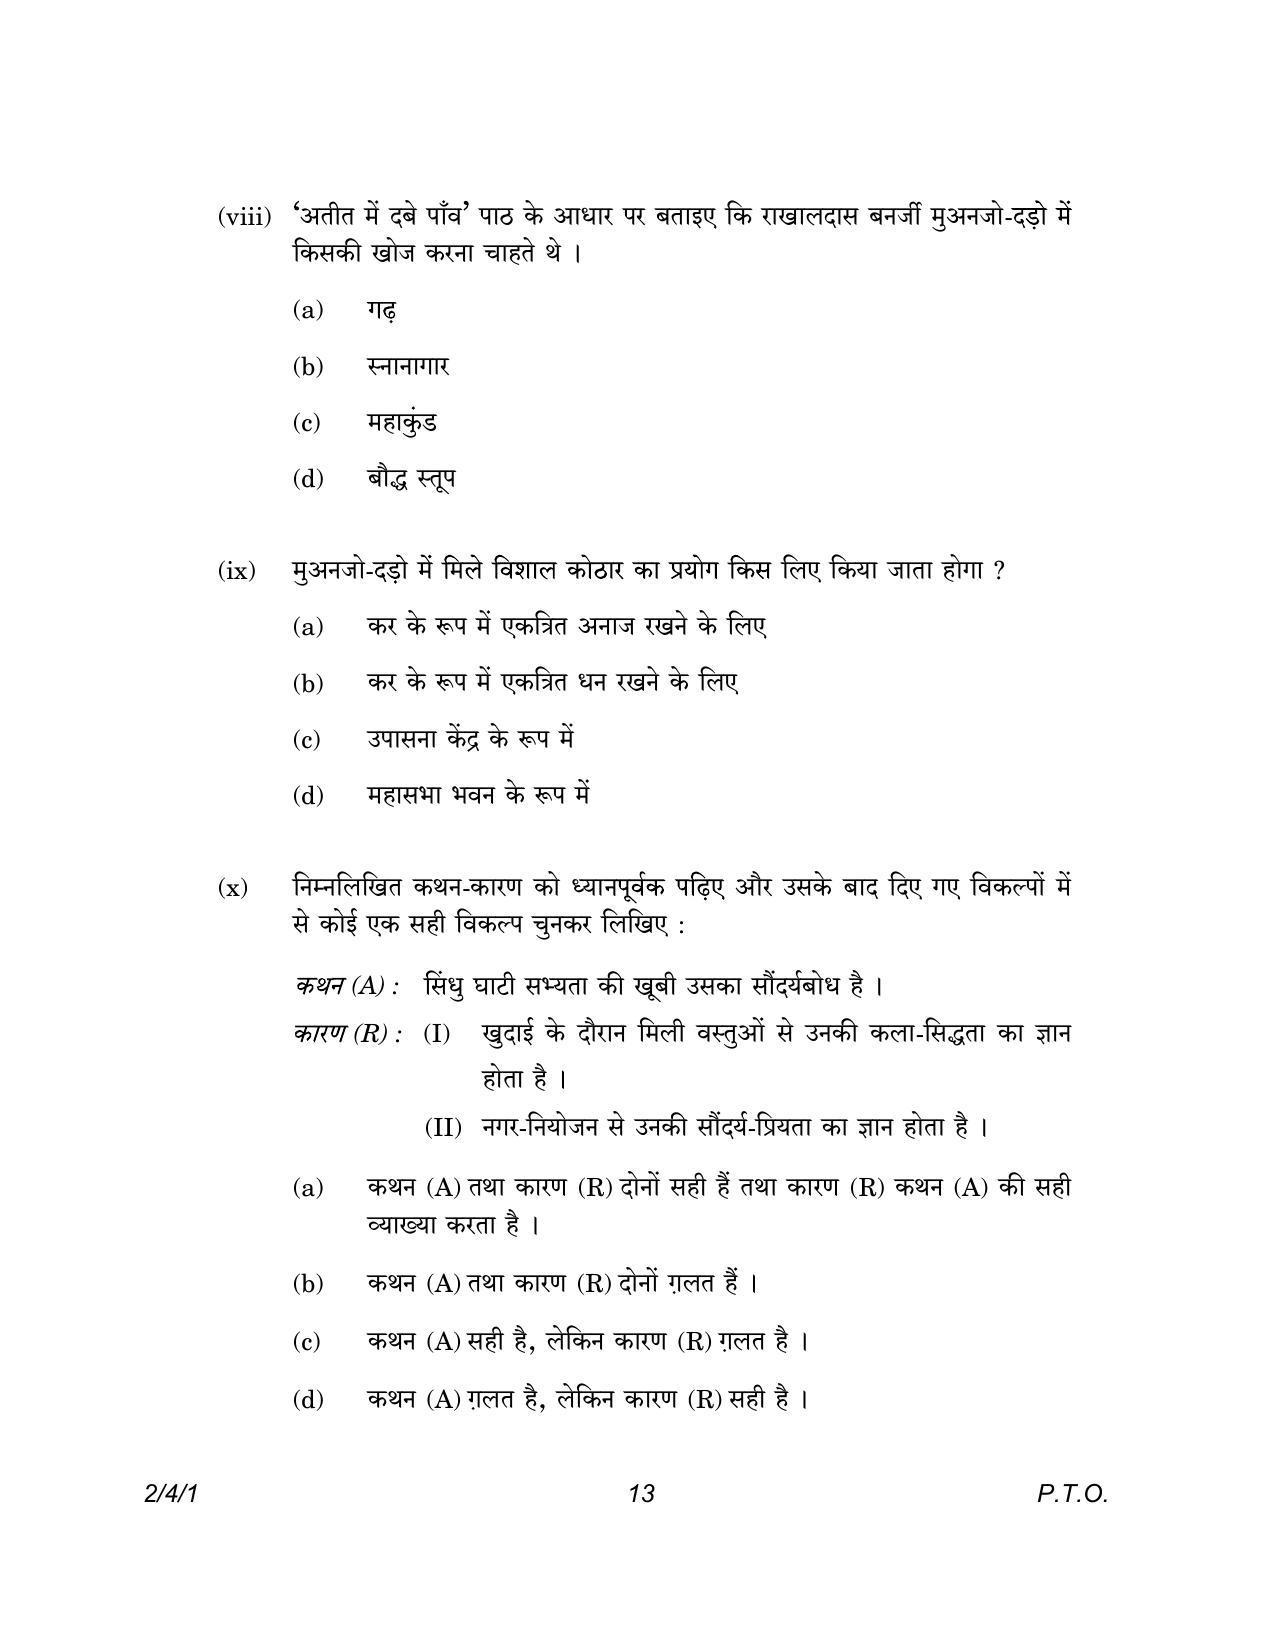 CBSE Class 12 2-4-1 Hindi Core version 2023 Question Paper - Page 13